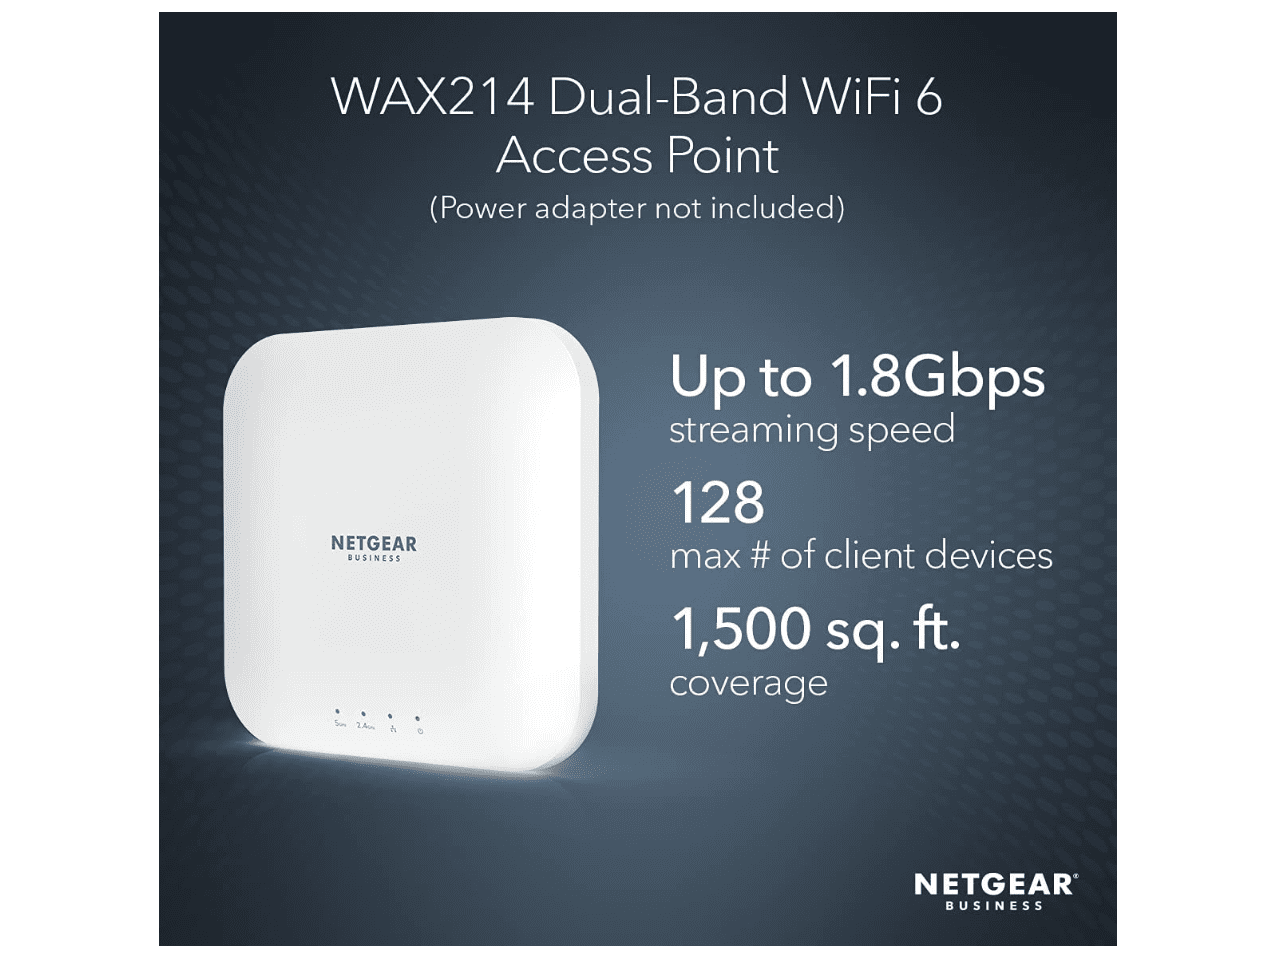 NETGEAR WiFi 6 Access Point (WAX214) - Dual-Band PoE Access